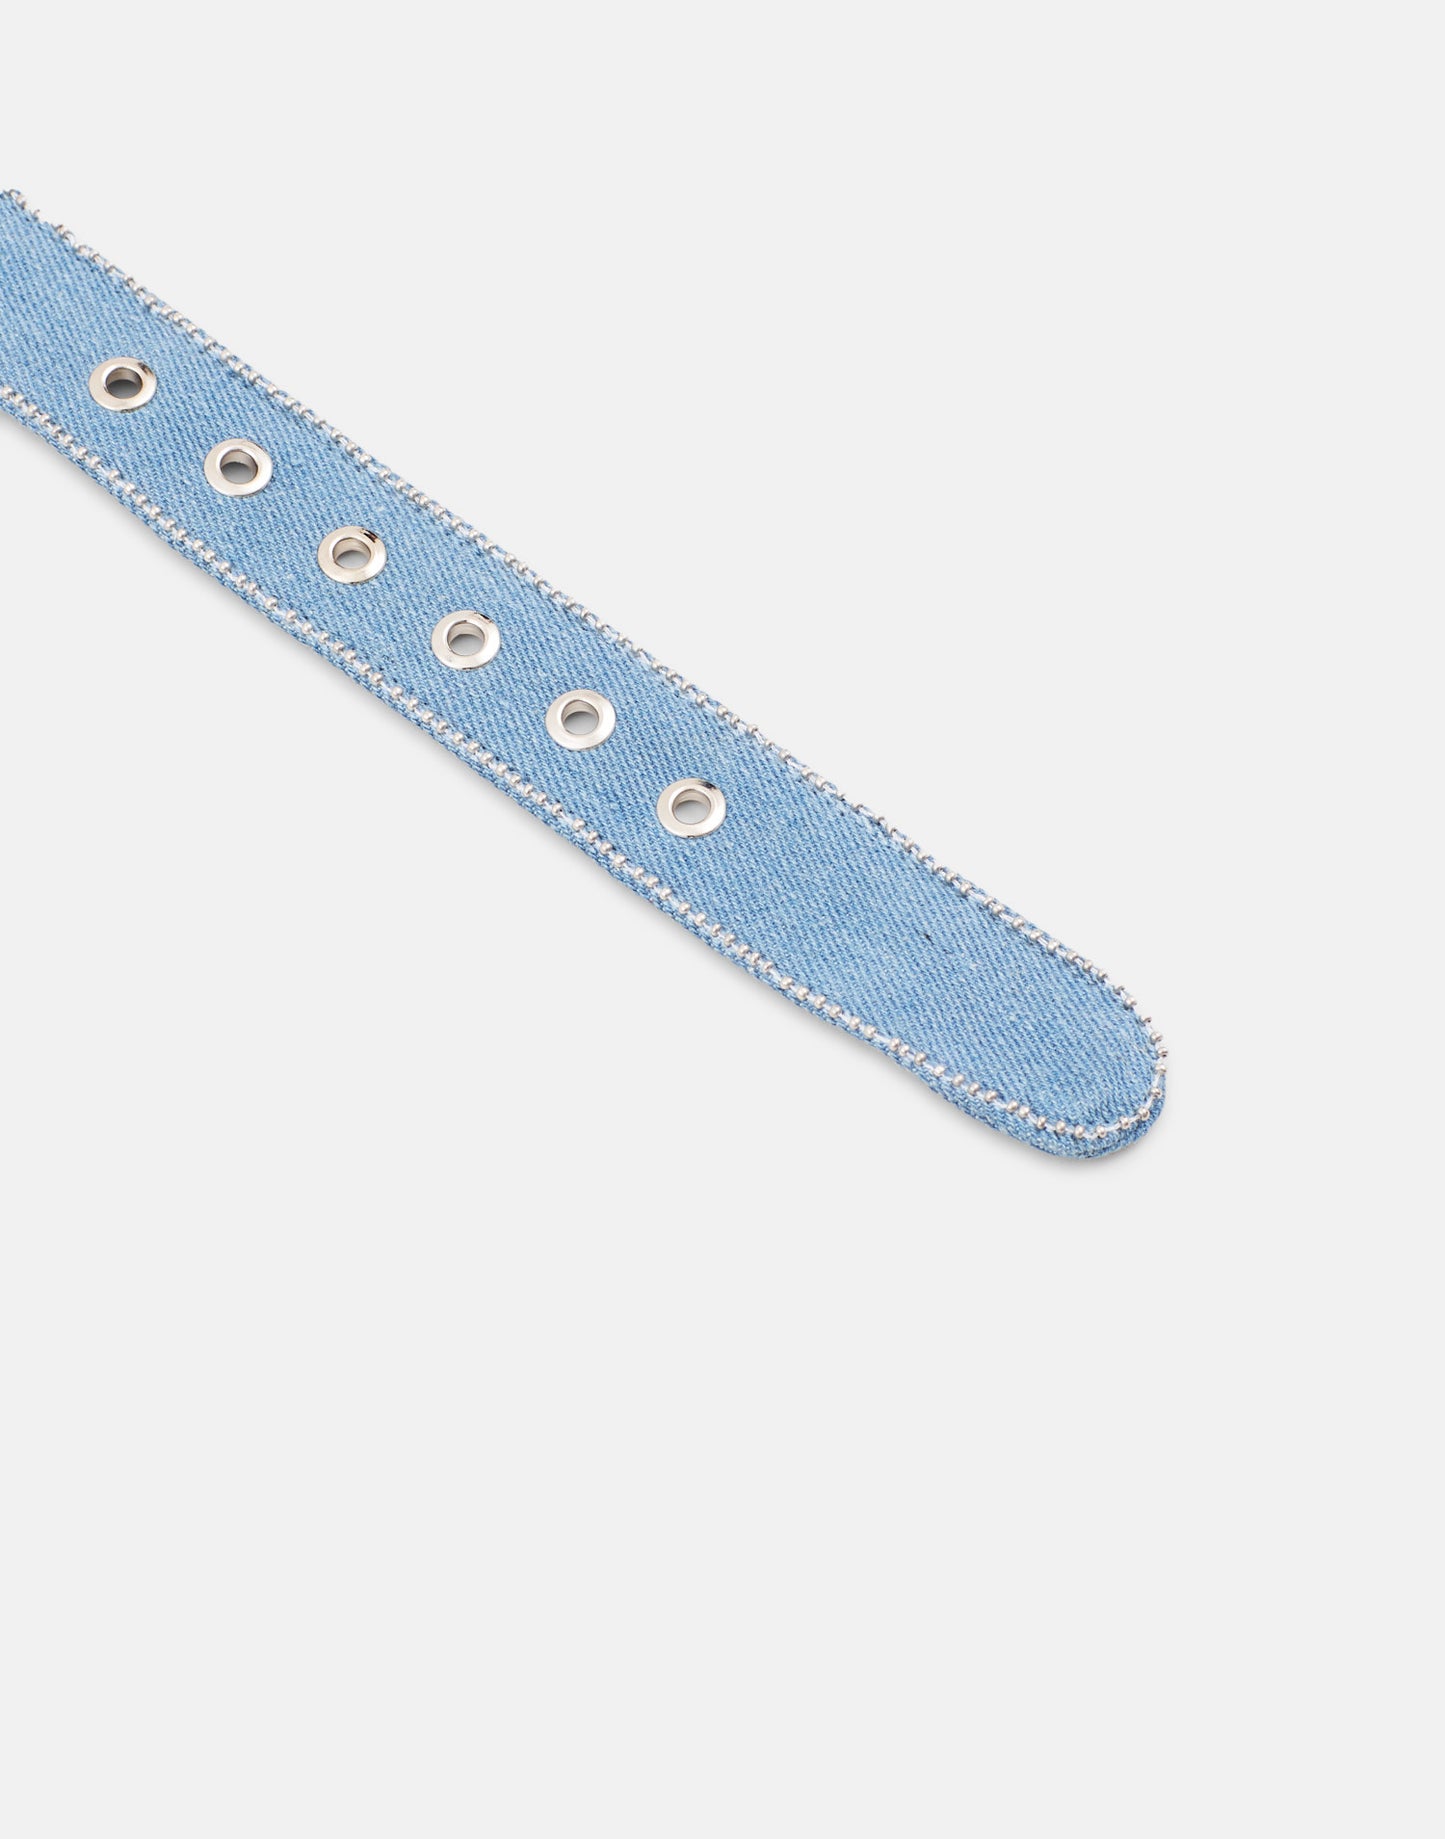 Embroidered denim belt